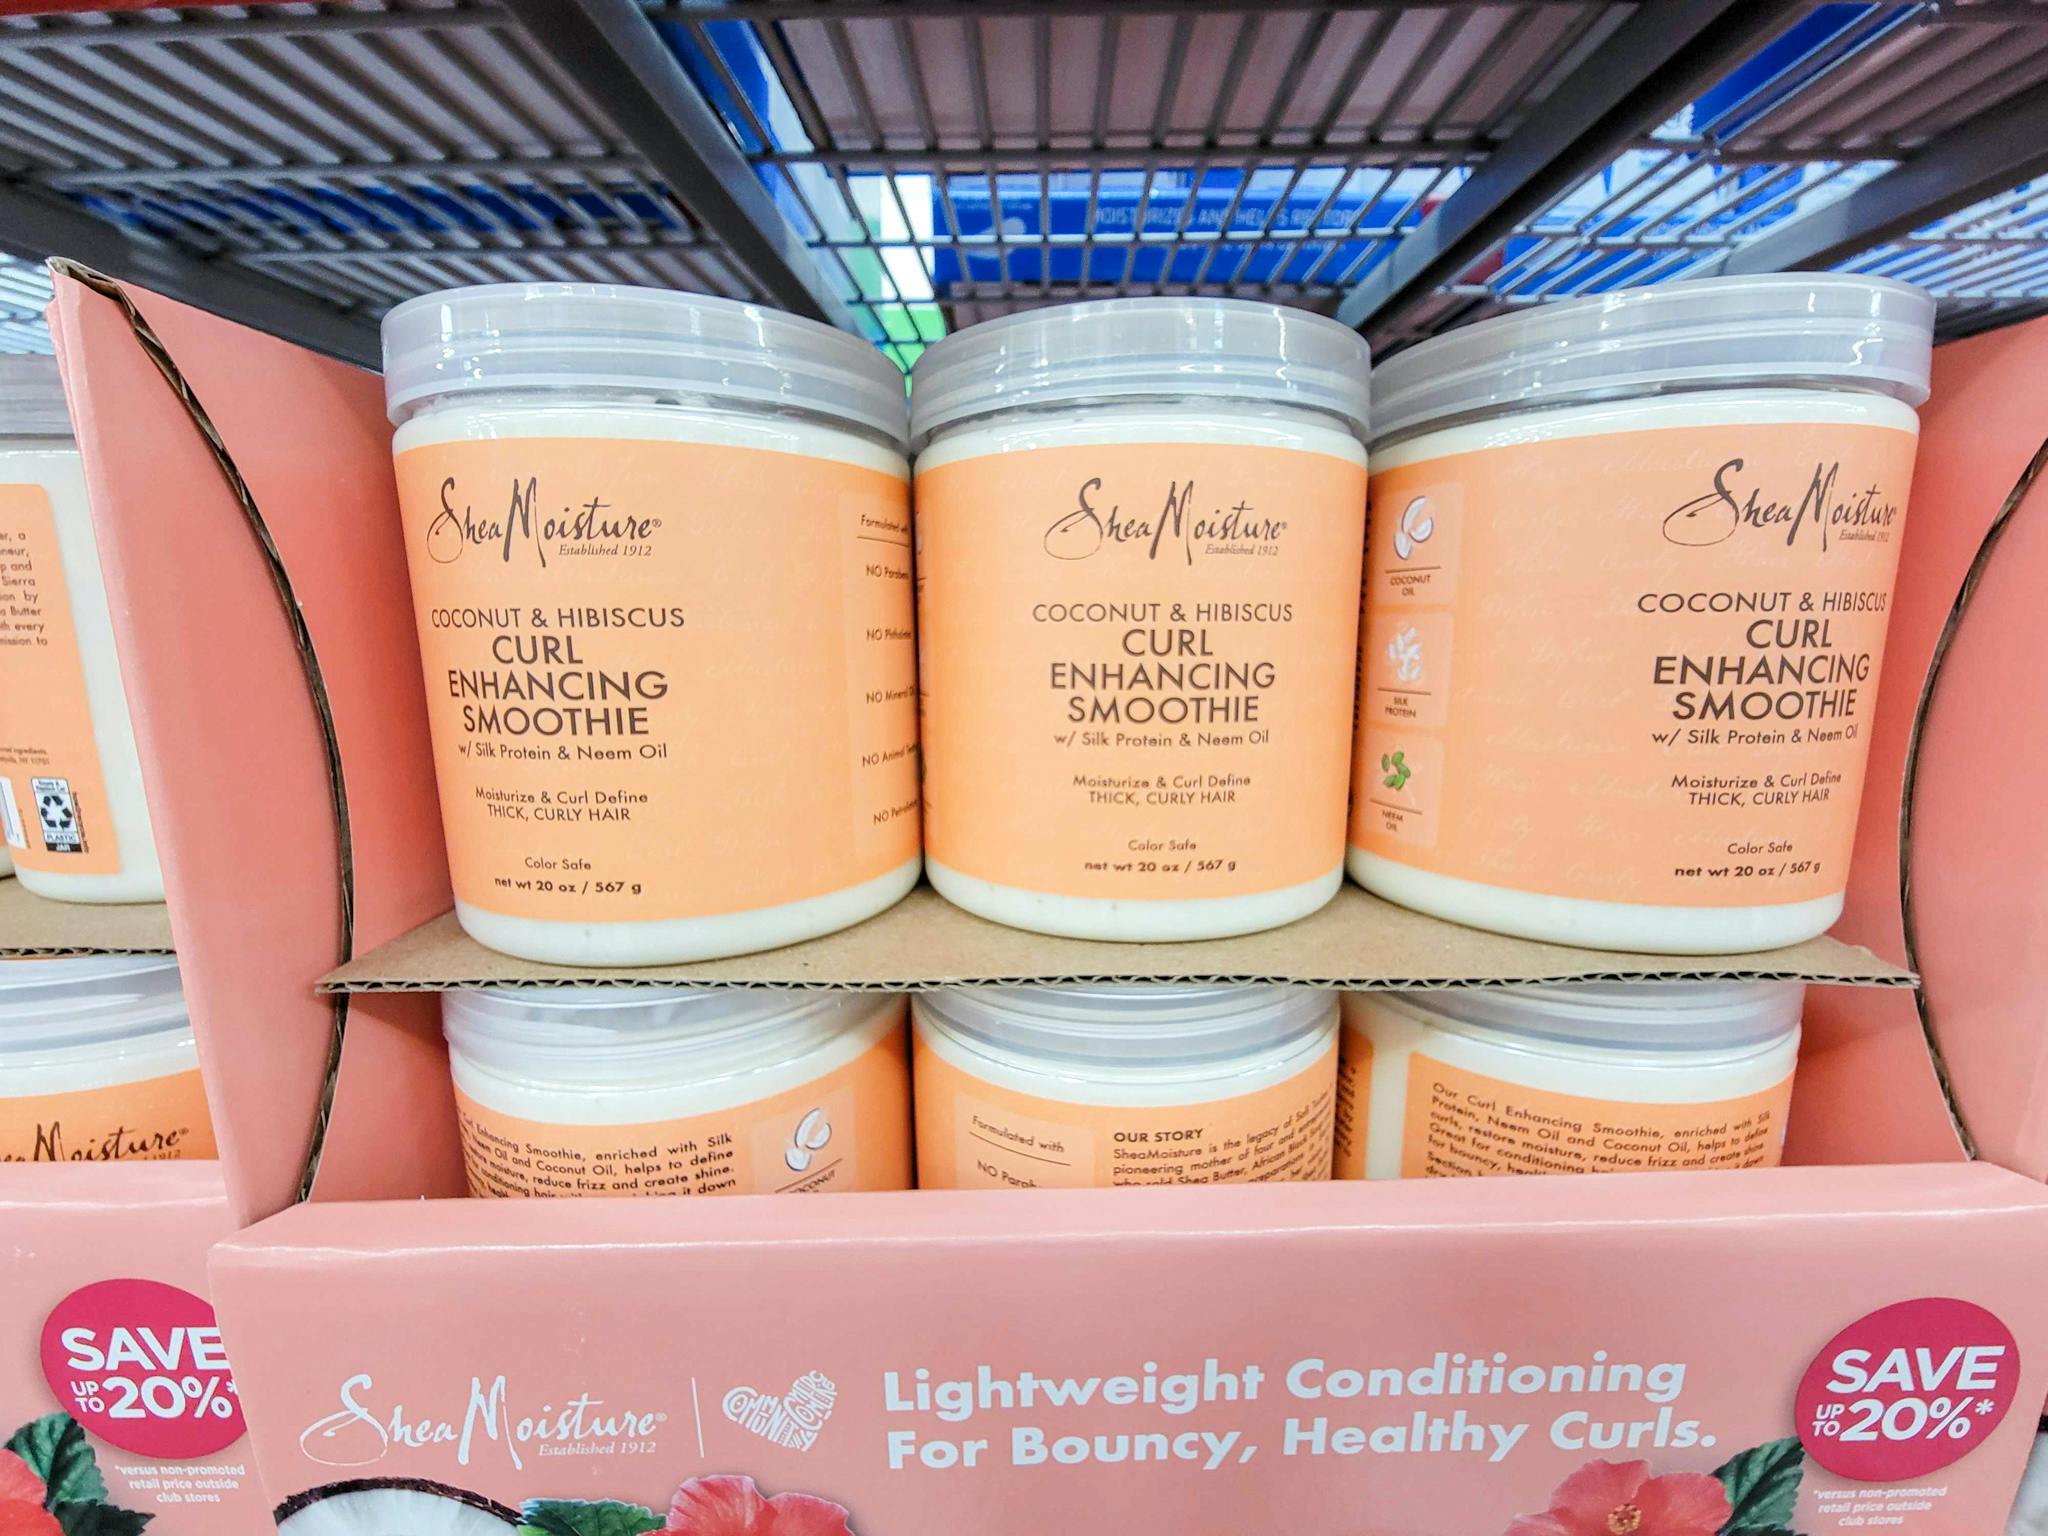 display of large tubs of shea moisture curl enhancing cream